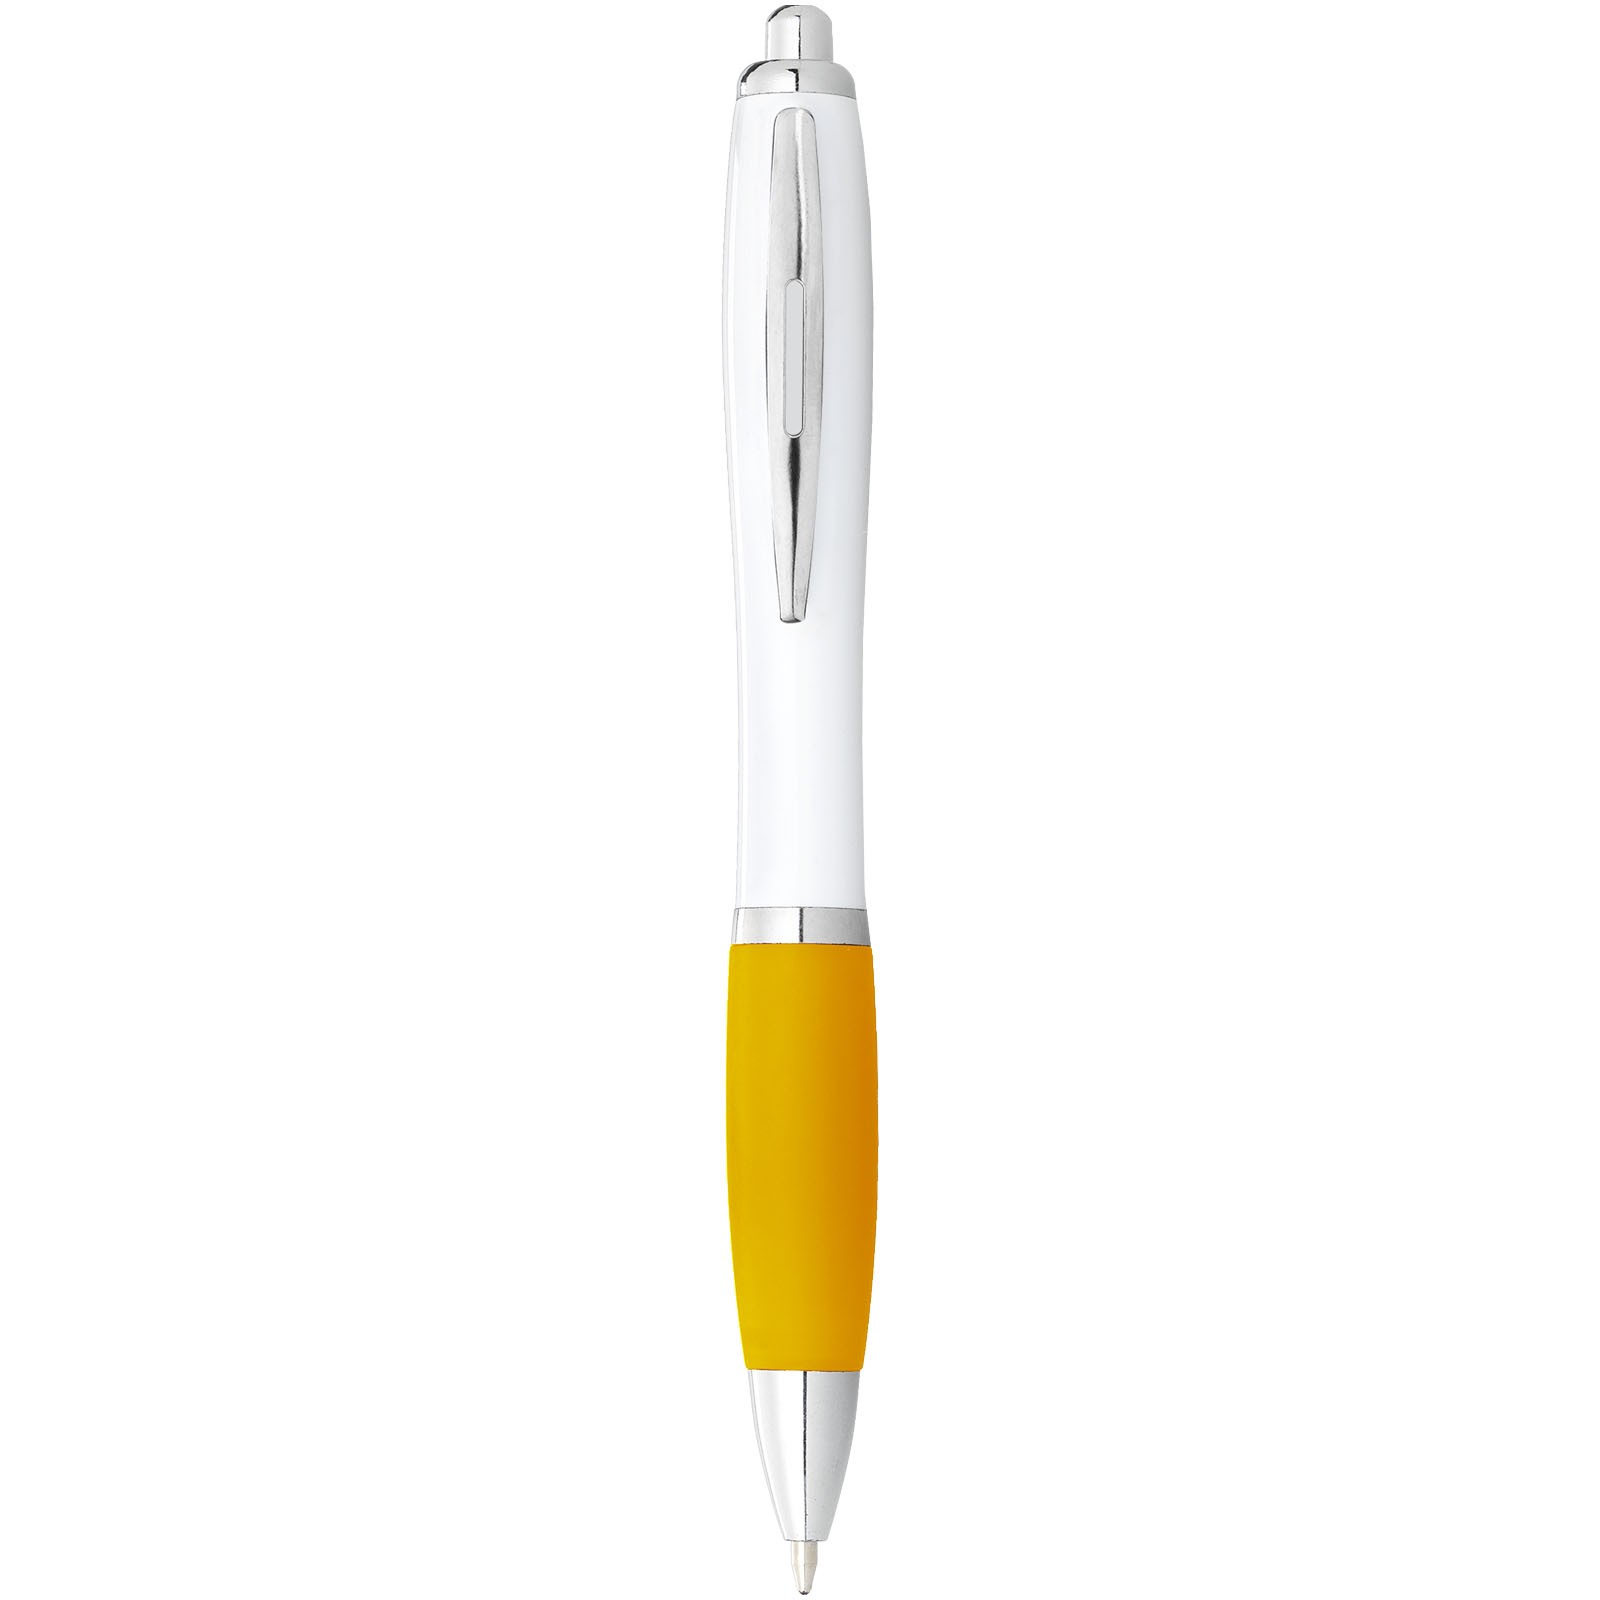 Bílé kuličkové pero Nash s barevným úchopem - Bílá / Žlutá